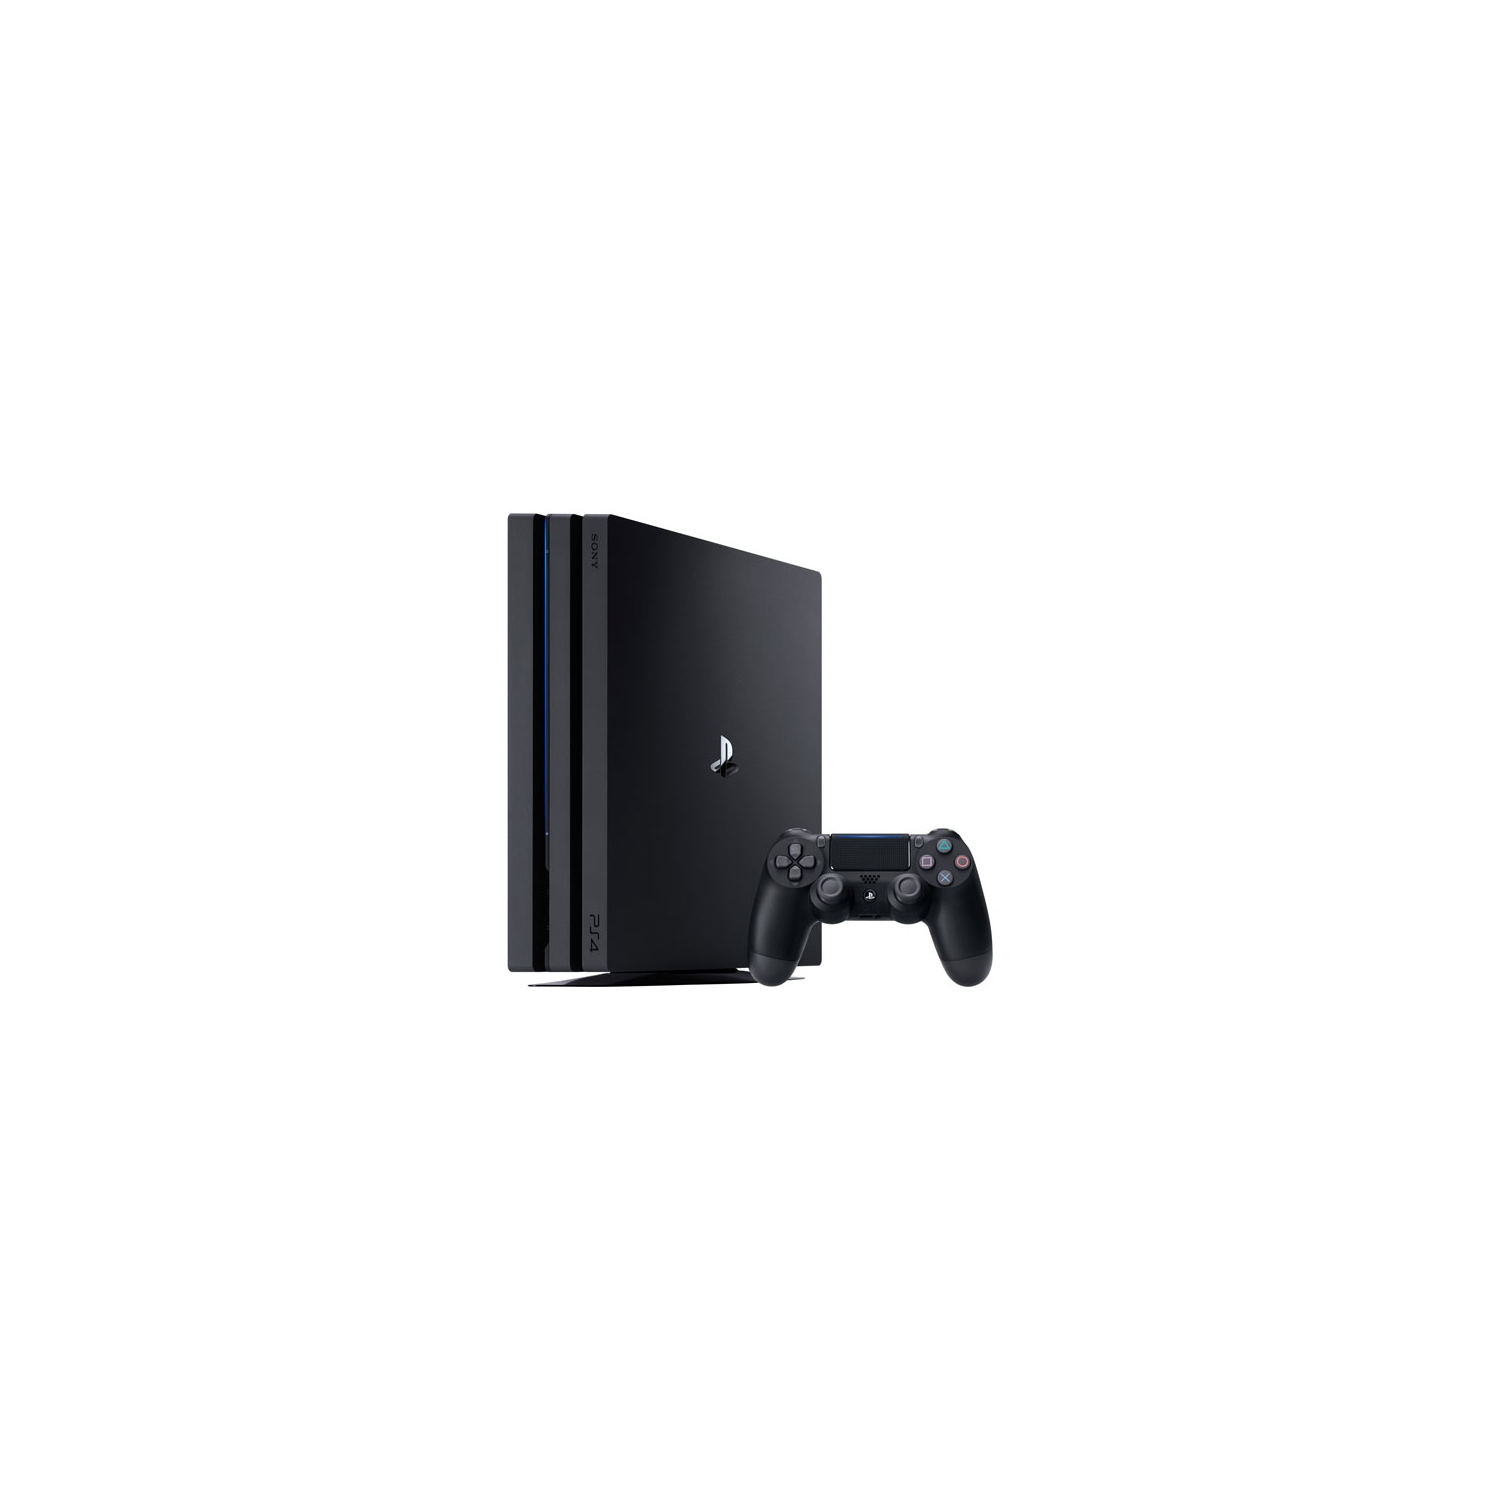 Refurbished (Fair) - PlayStation 4 Pro 1TB Console